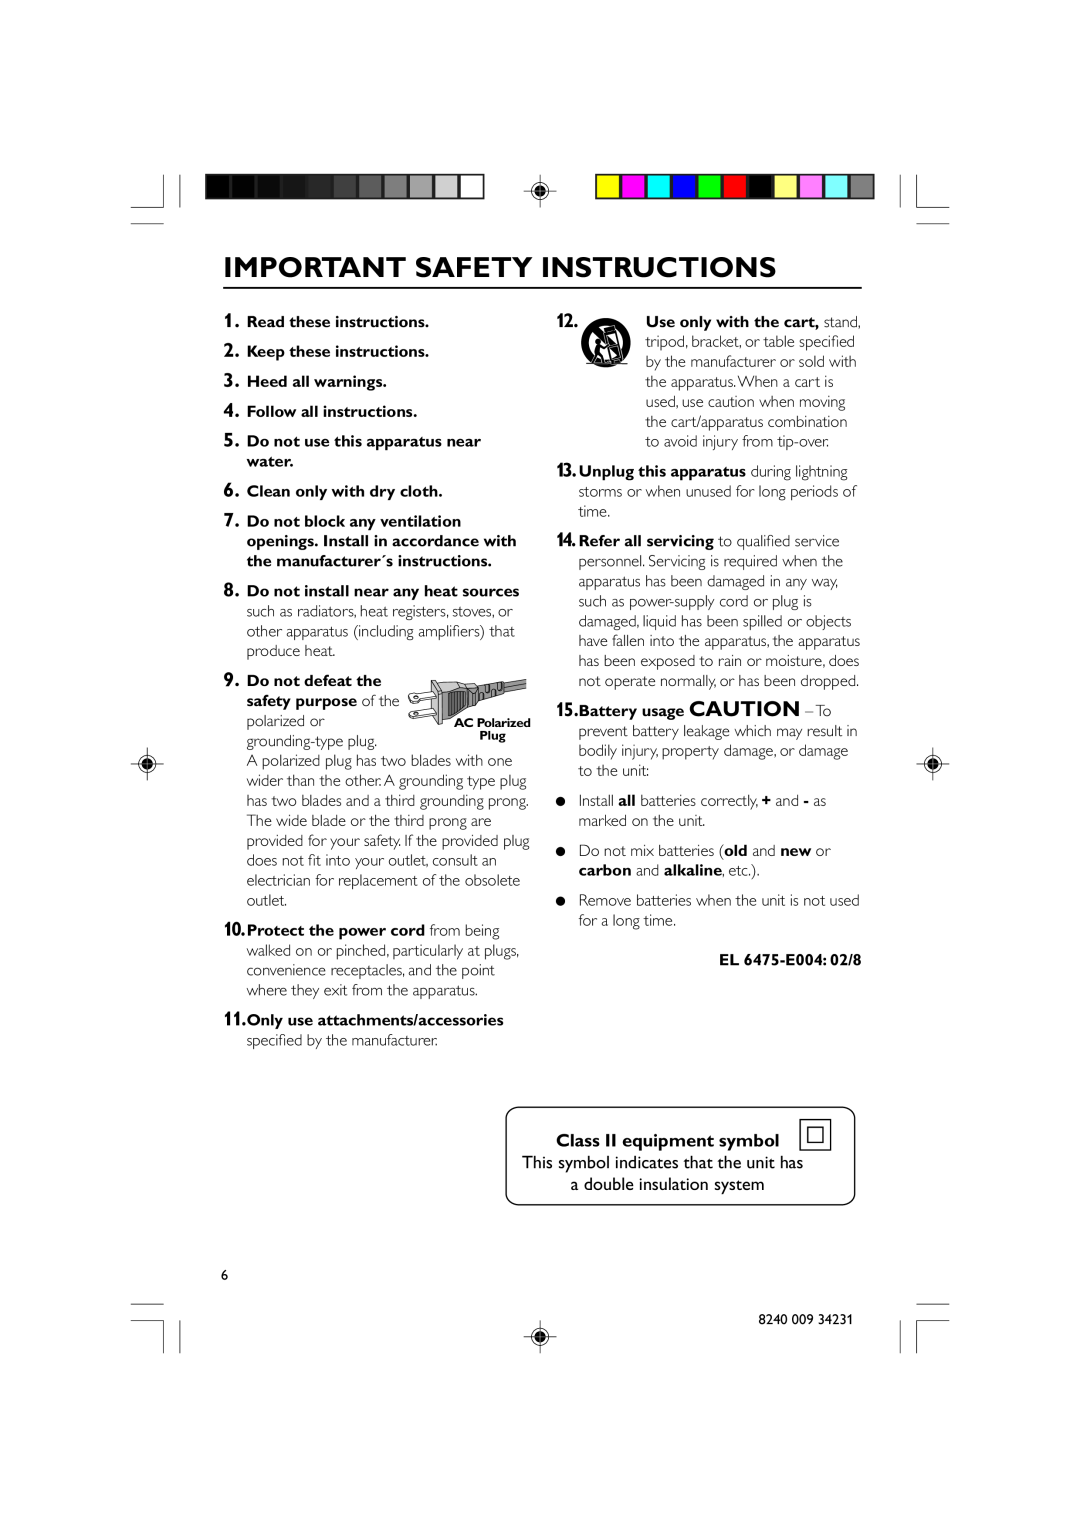 Magnavox MAS-80 warranty Class II equipment symbol, Important Safety Instructions 